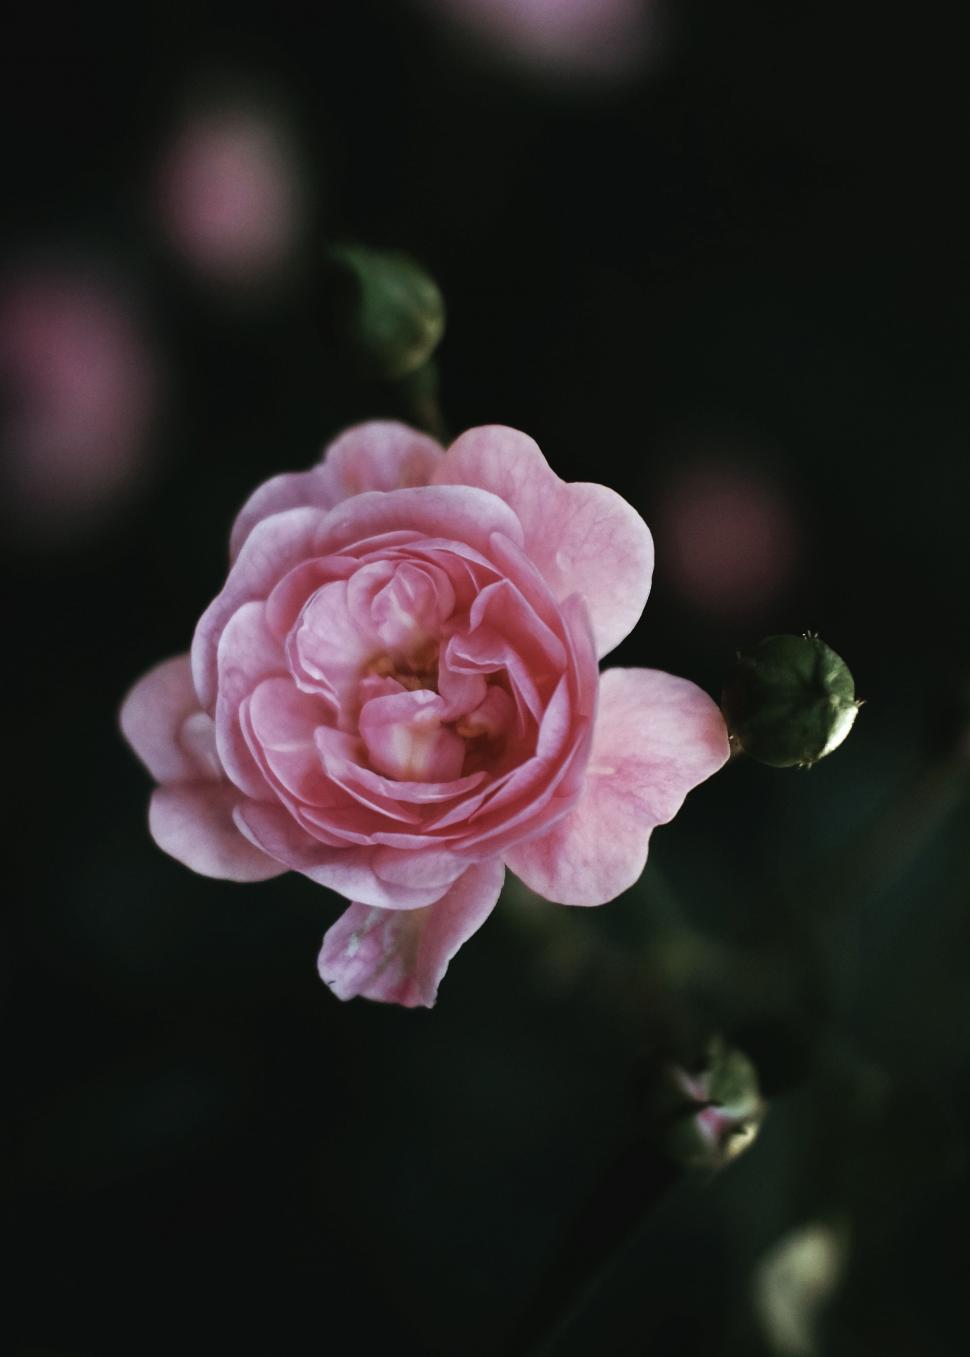 Free Image of Pink Rose Blooming on Black Background 